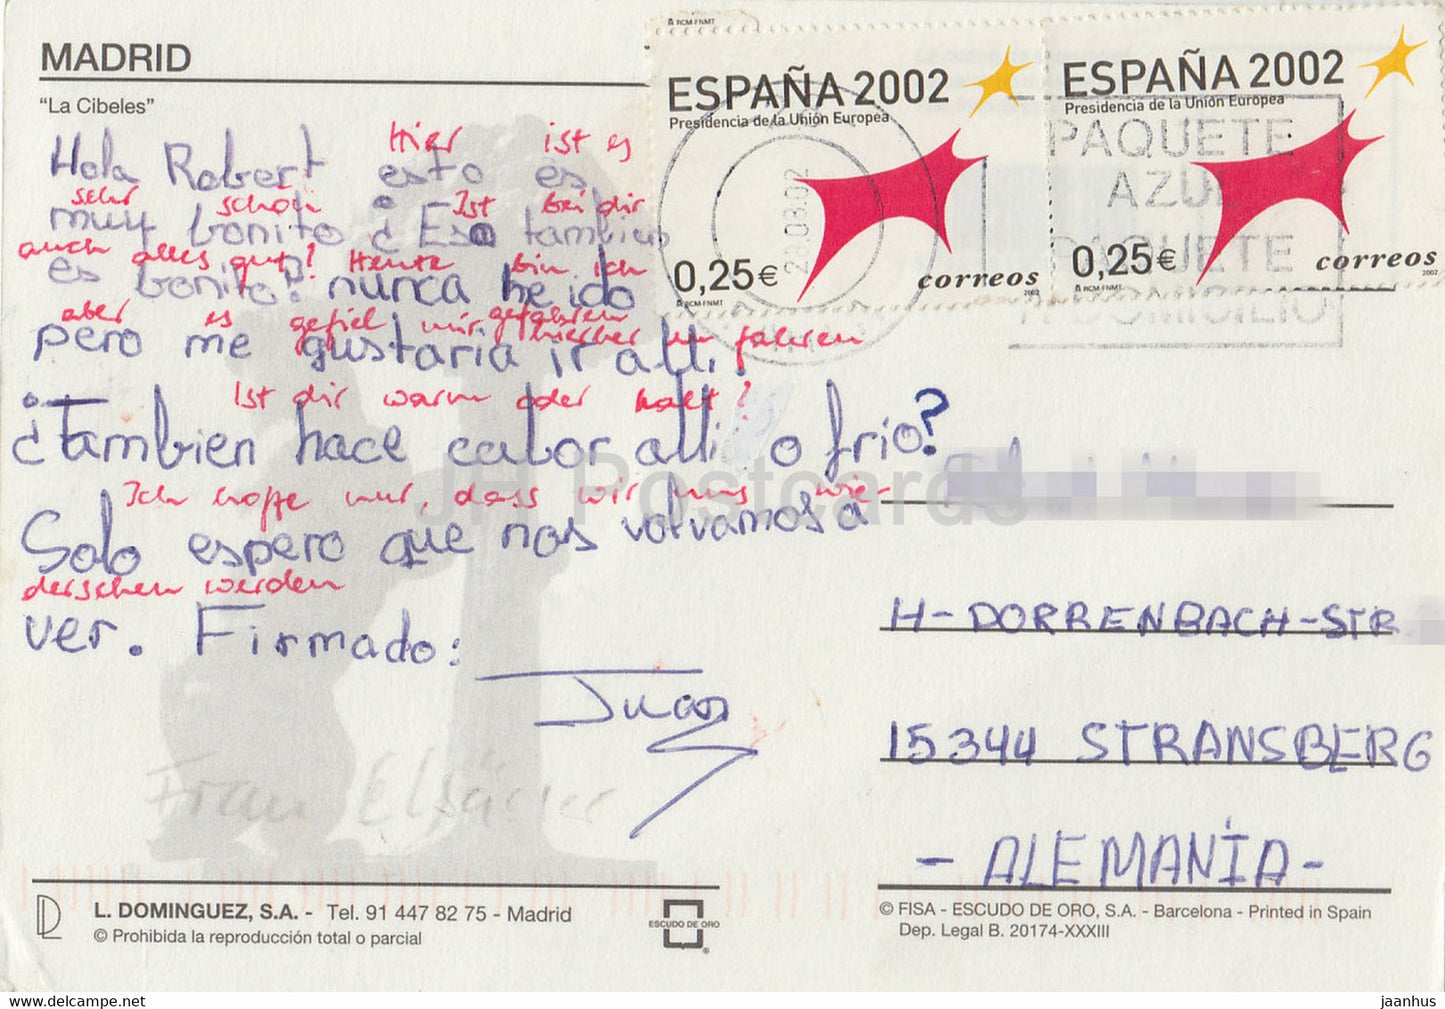 Madrid – La Cibeles – 2002 – Spanien – gebraucht